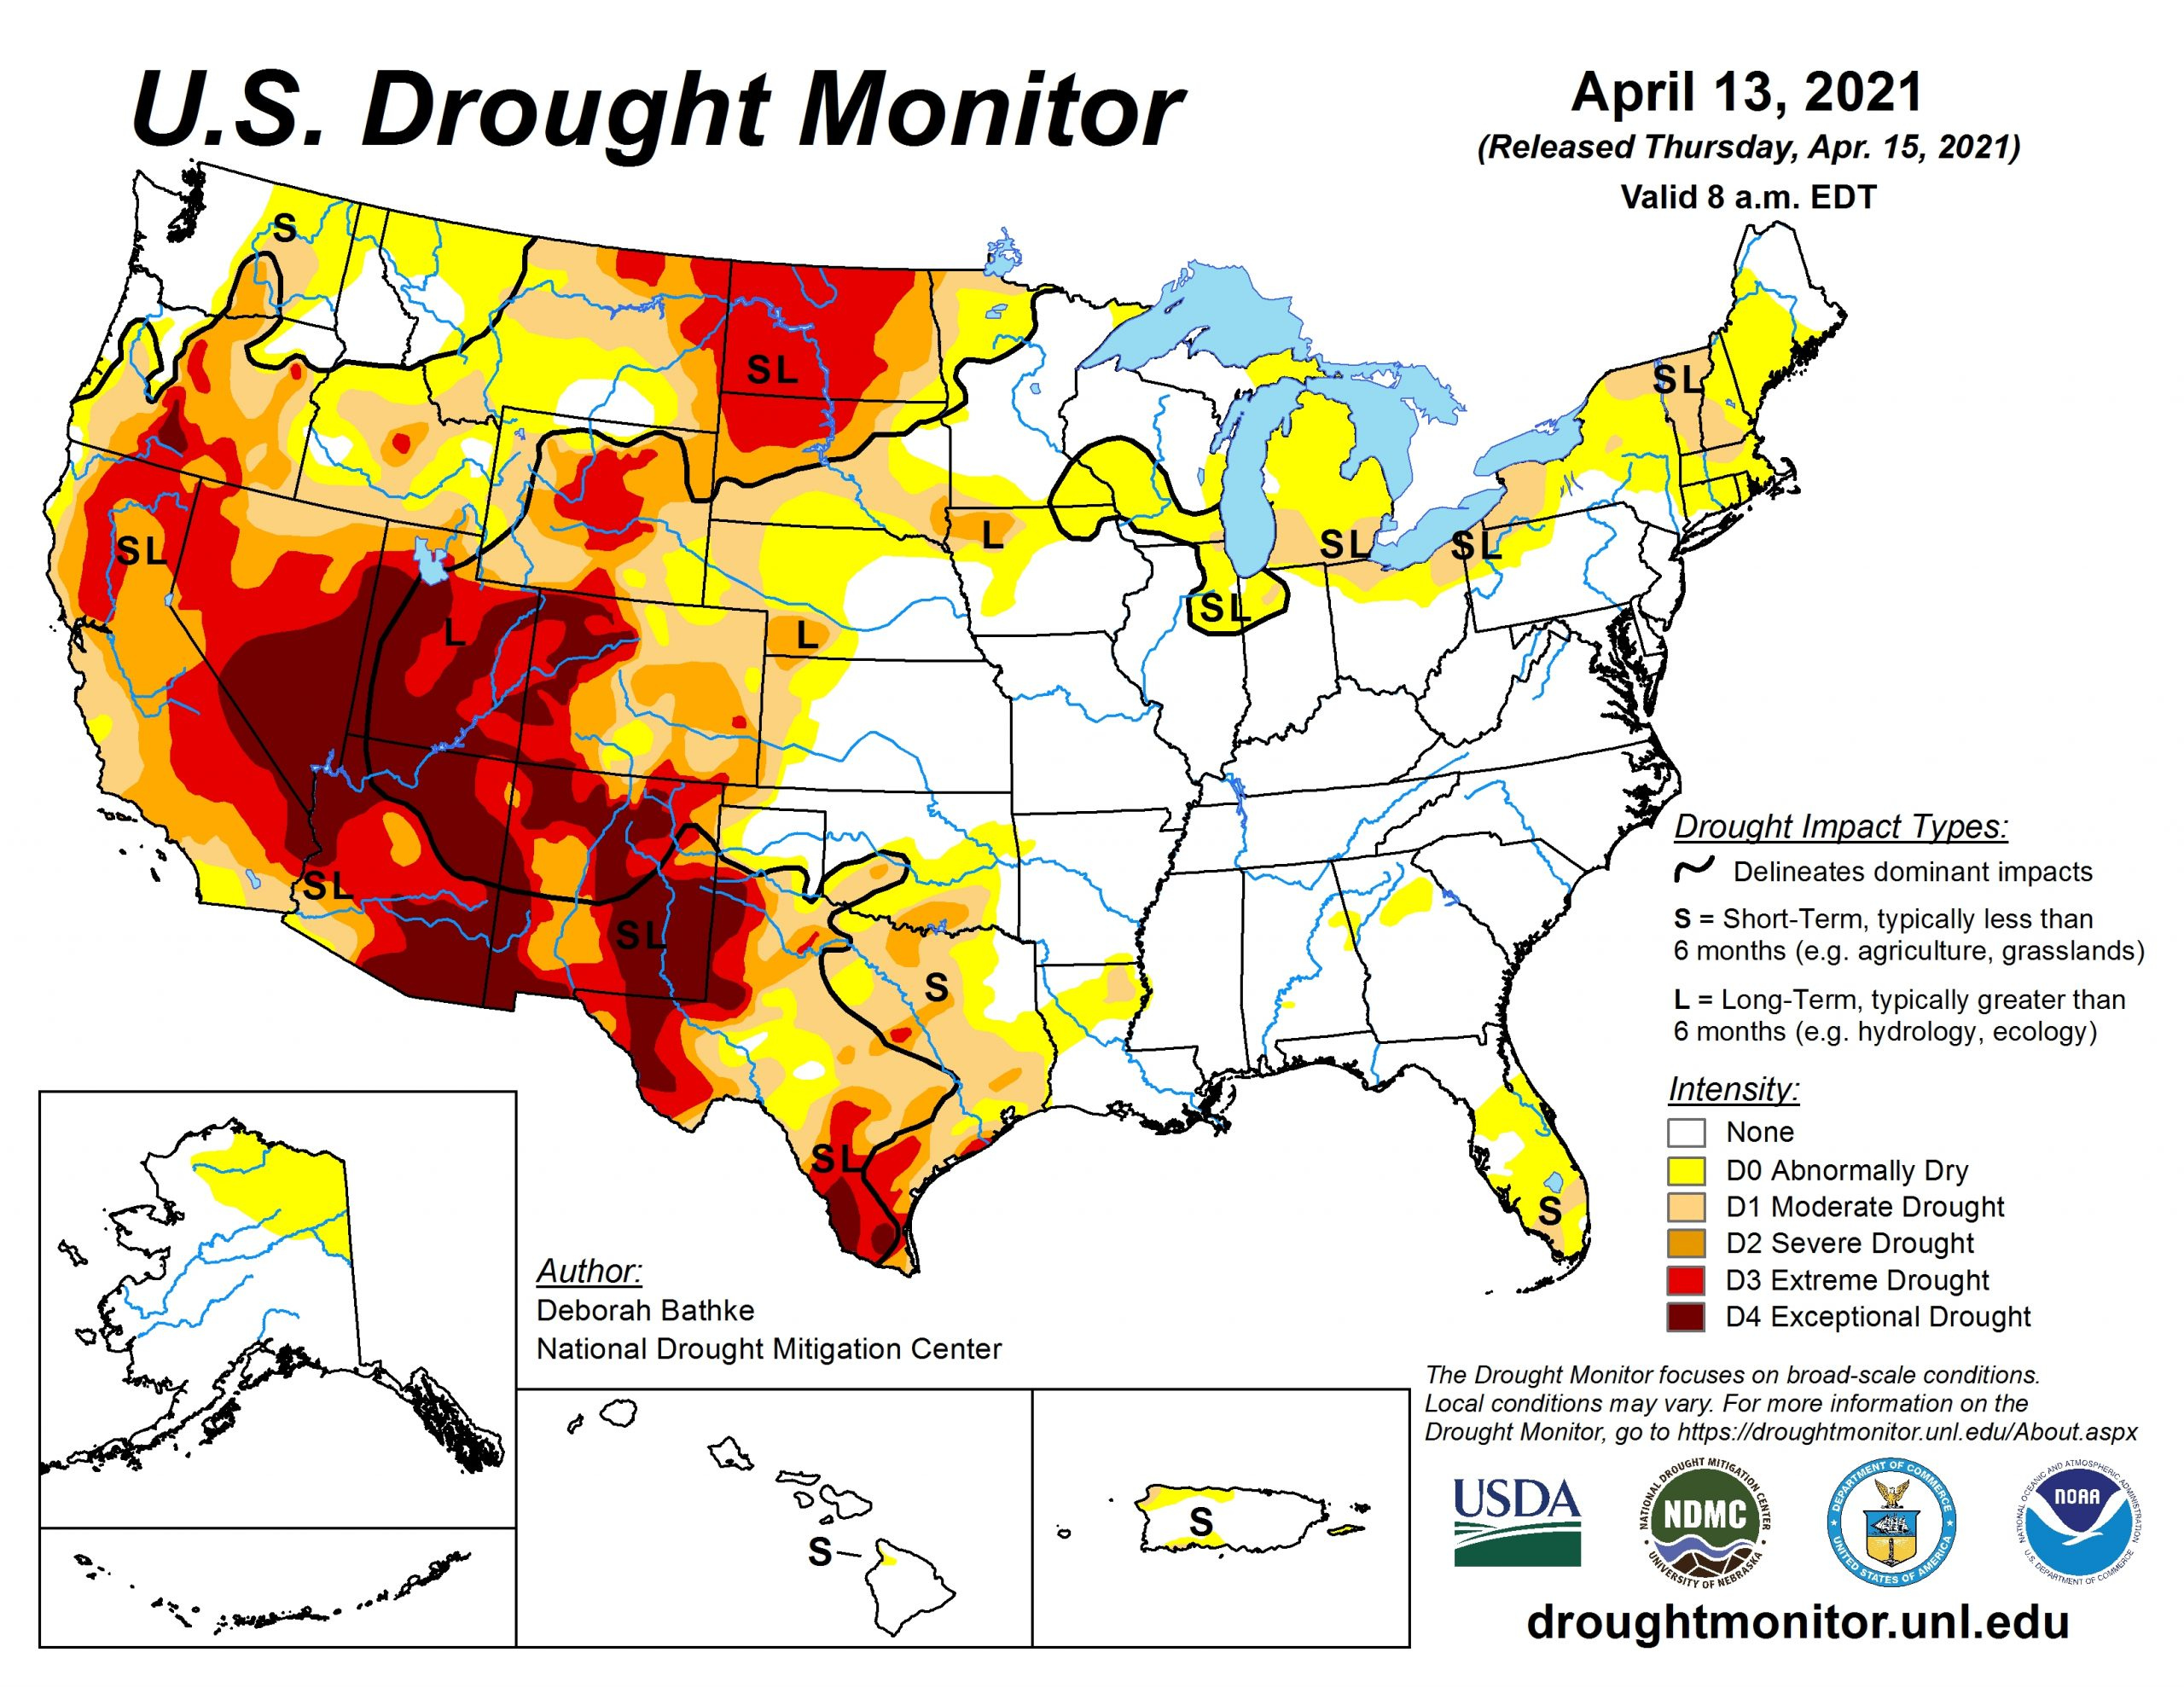 KRVN 880 KRVN 93 1 KAMI U S Drought Monitor Tale Of Two Regions